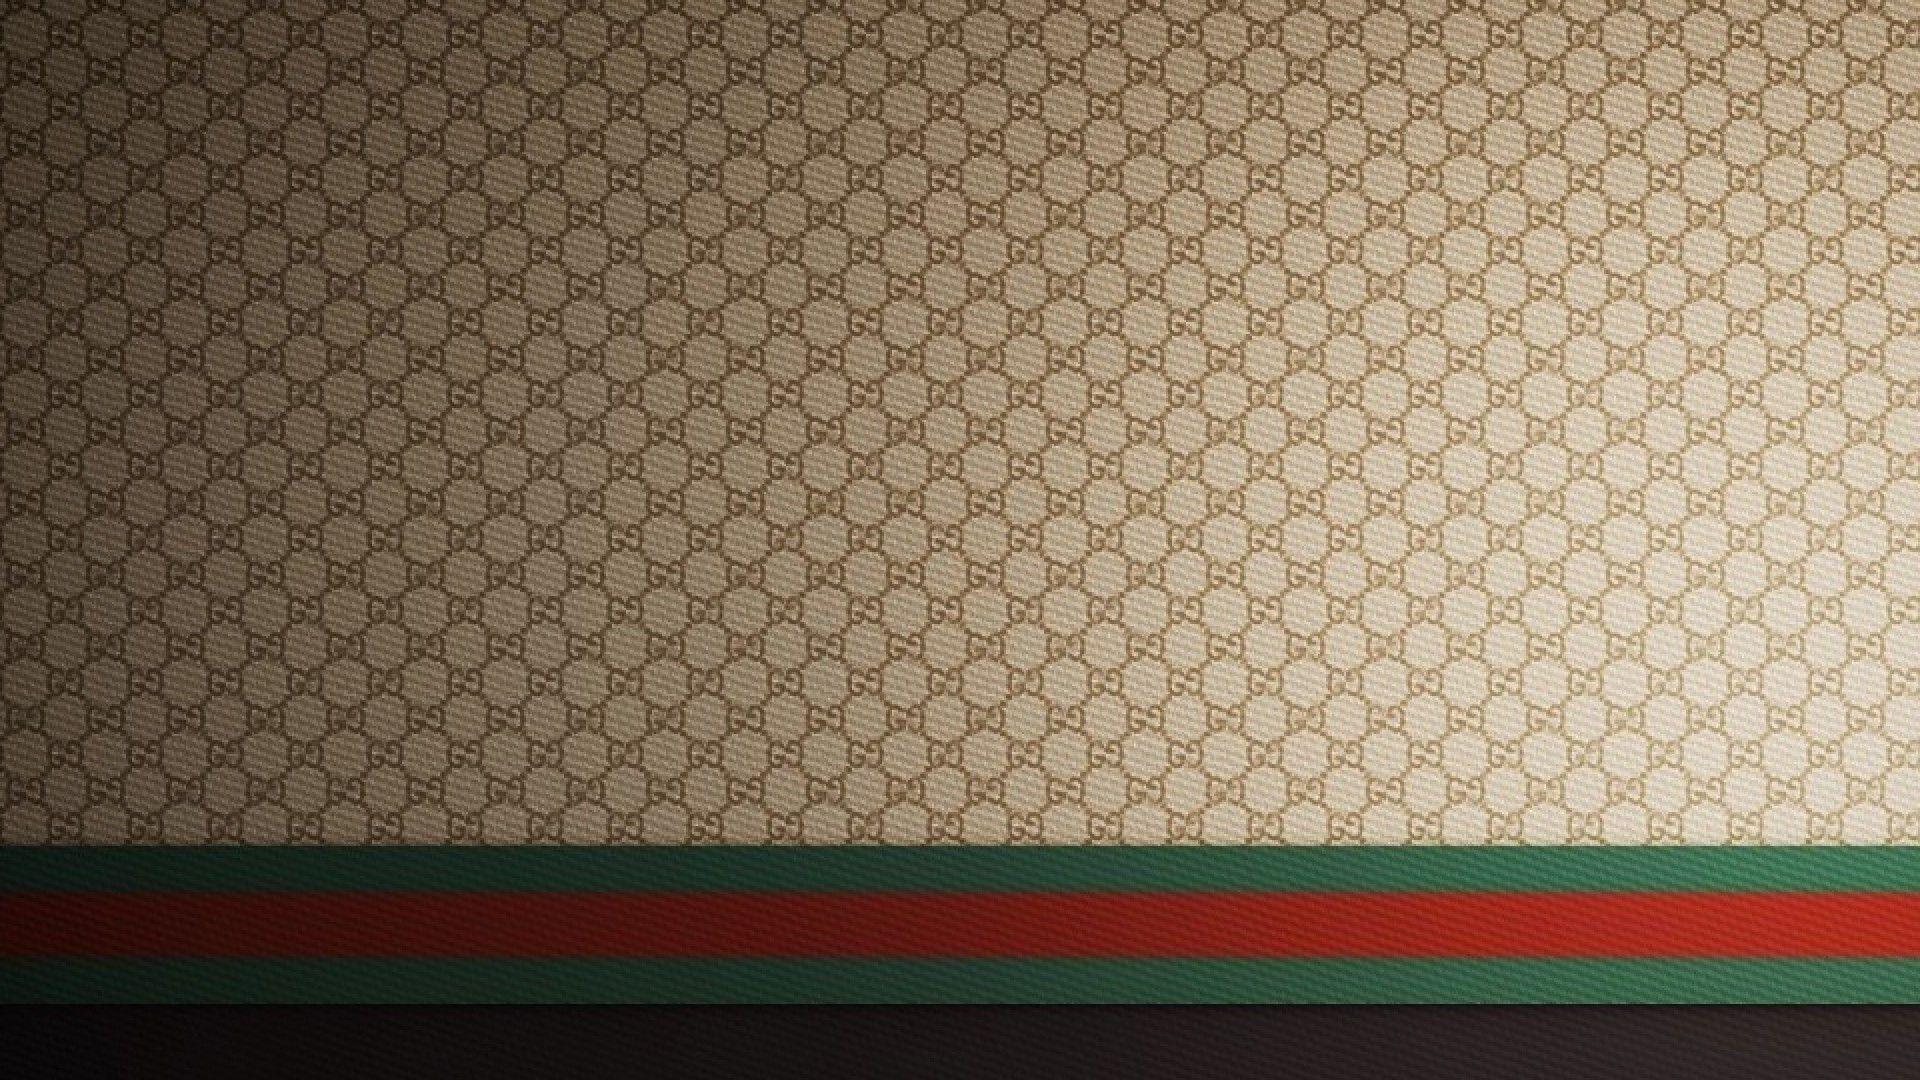 Gucci wallpaper HD free download. Logo wallpaper hd, iPhone wallpaper, iPhone logo